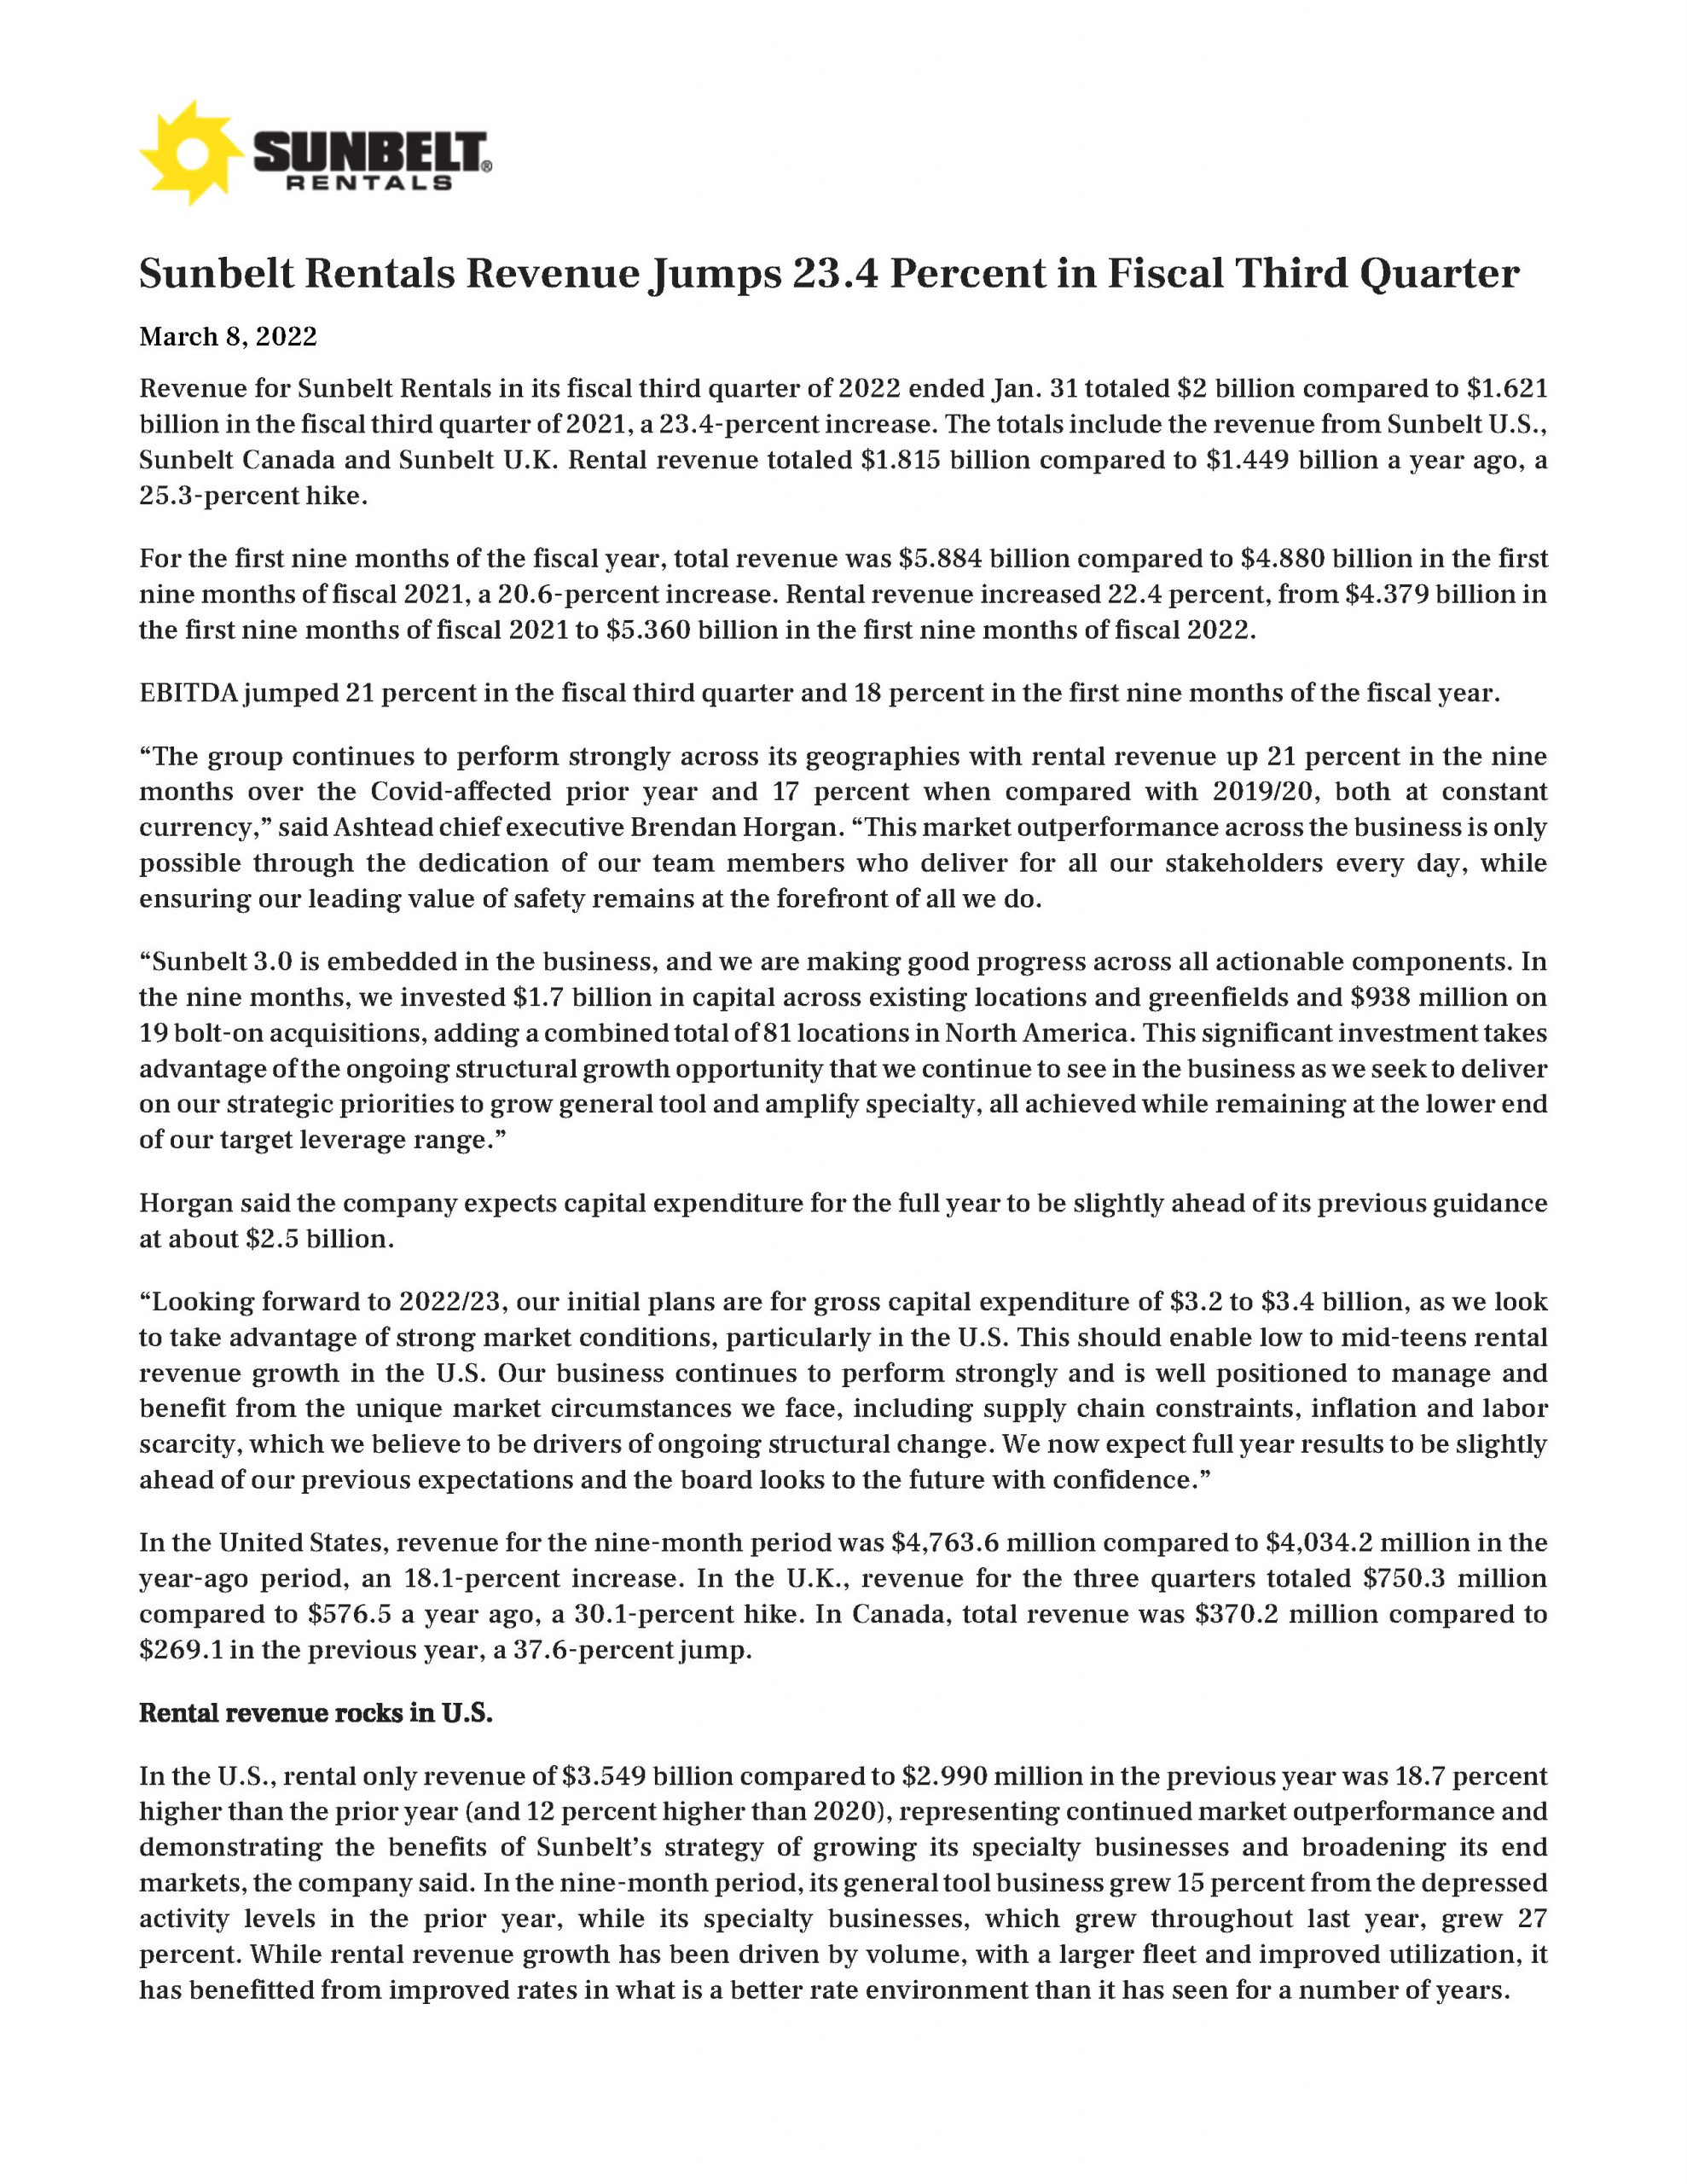 Sunbelt Rentals Revenue Jumps 23.4 Percent in Fiscal Third Quarter 3.8.22_Page_1